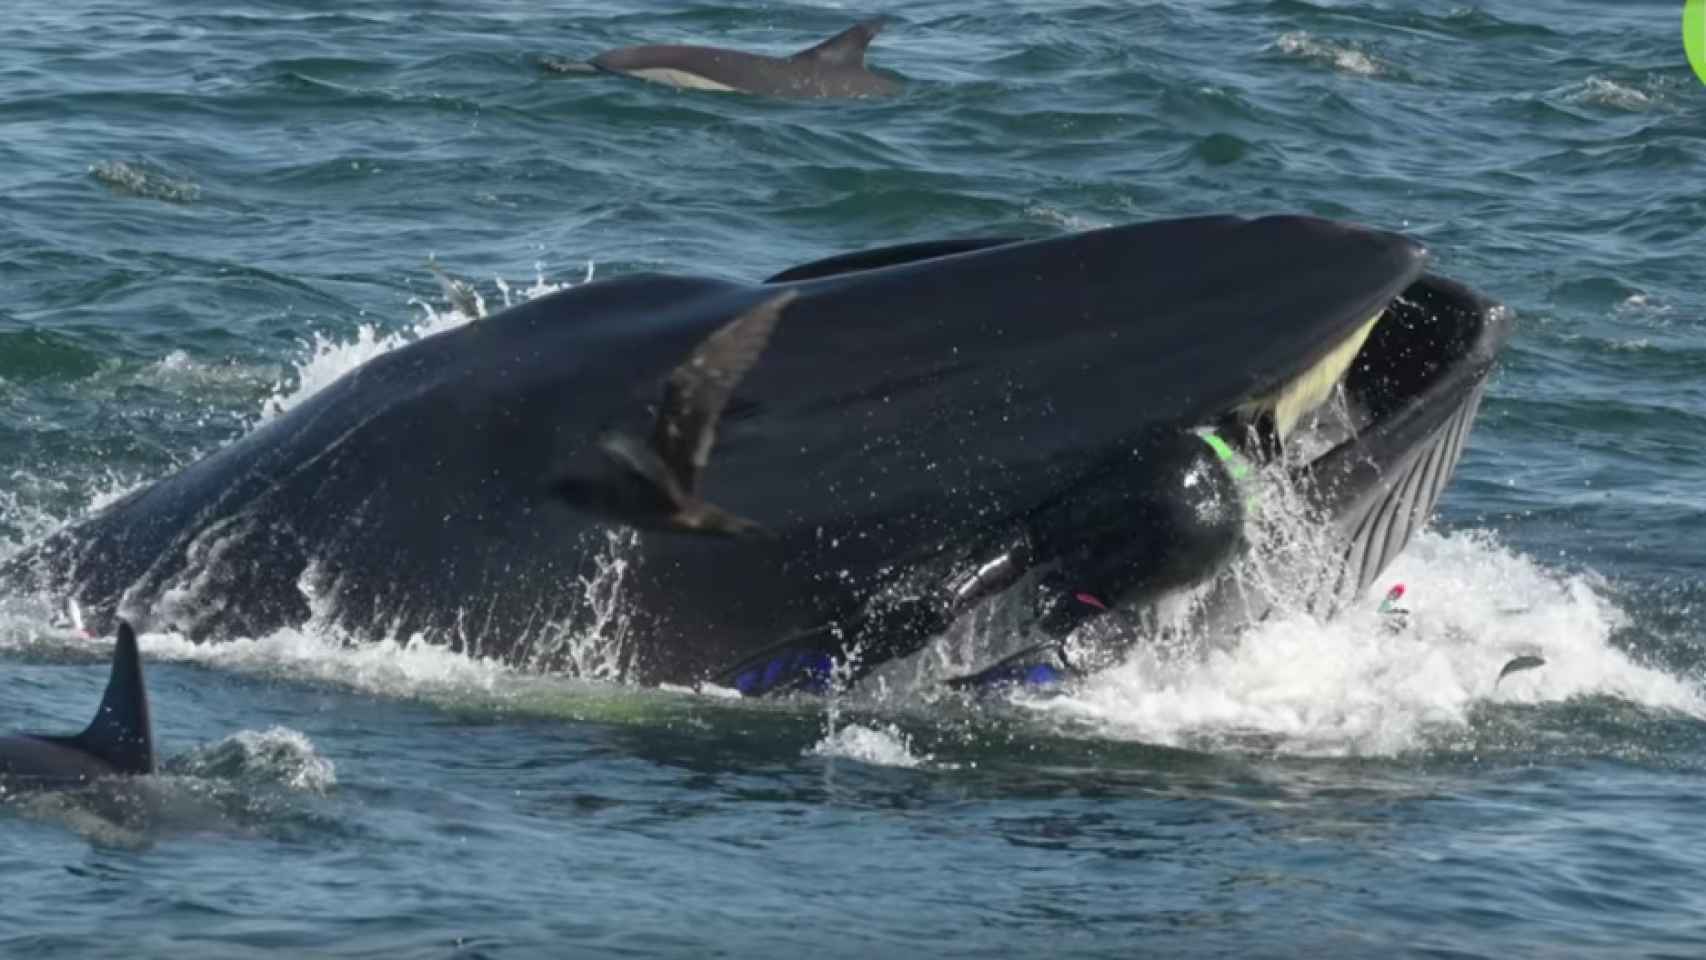 Una ballena rechaza a un buceador como tentempié.